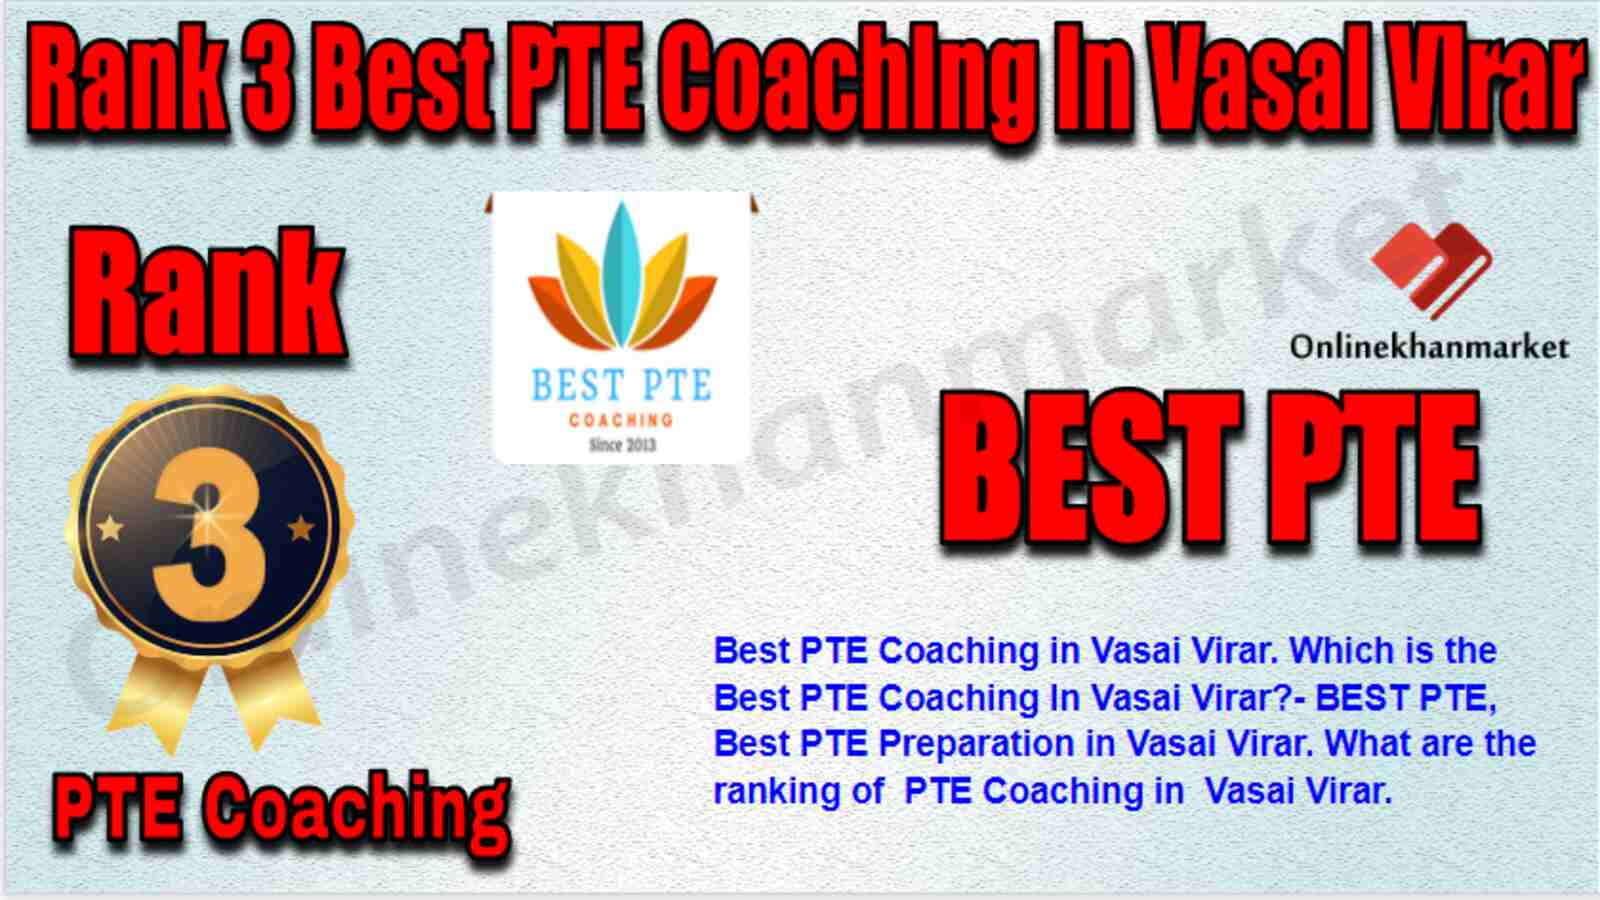 Rank 3 Best PTE Coaching in Vasai Virar